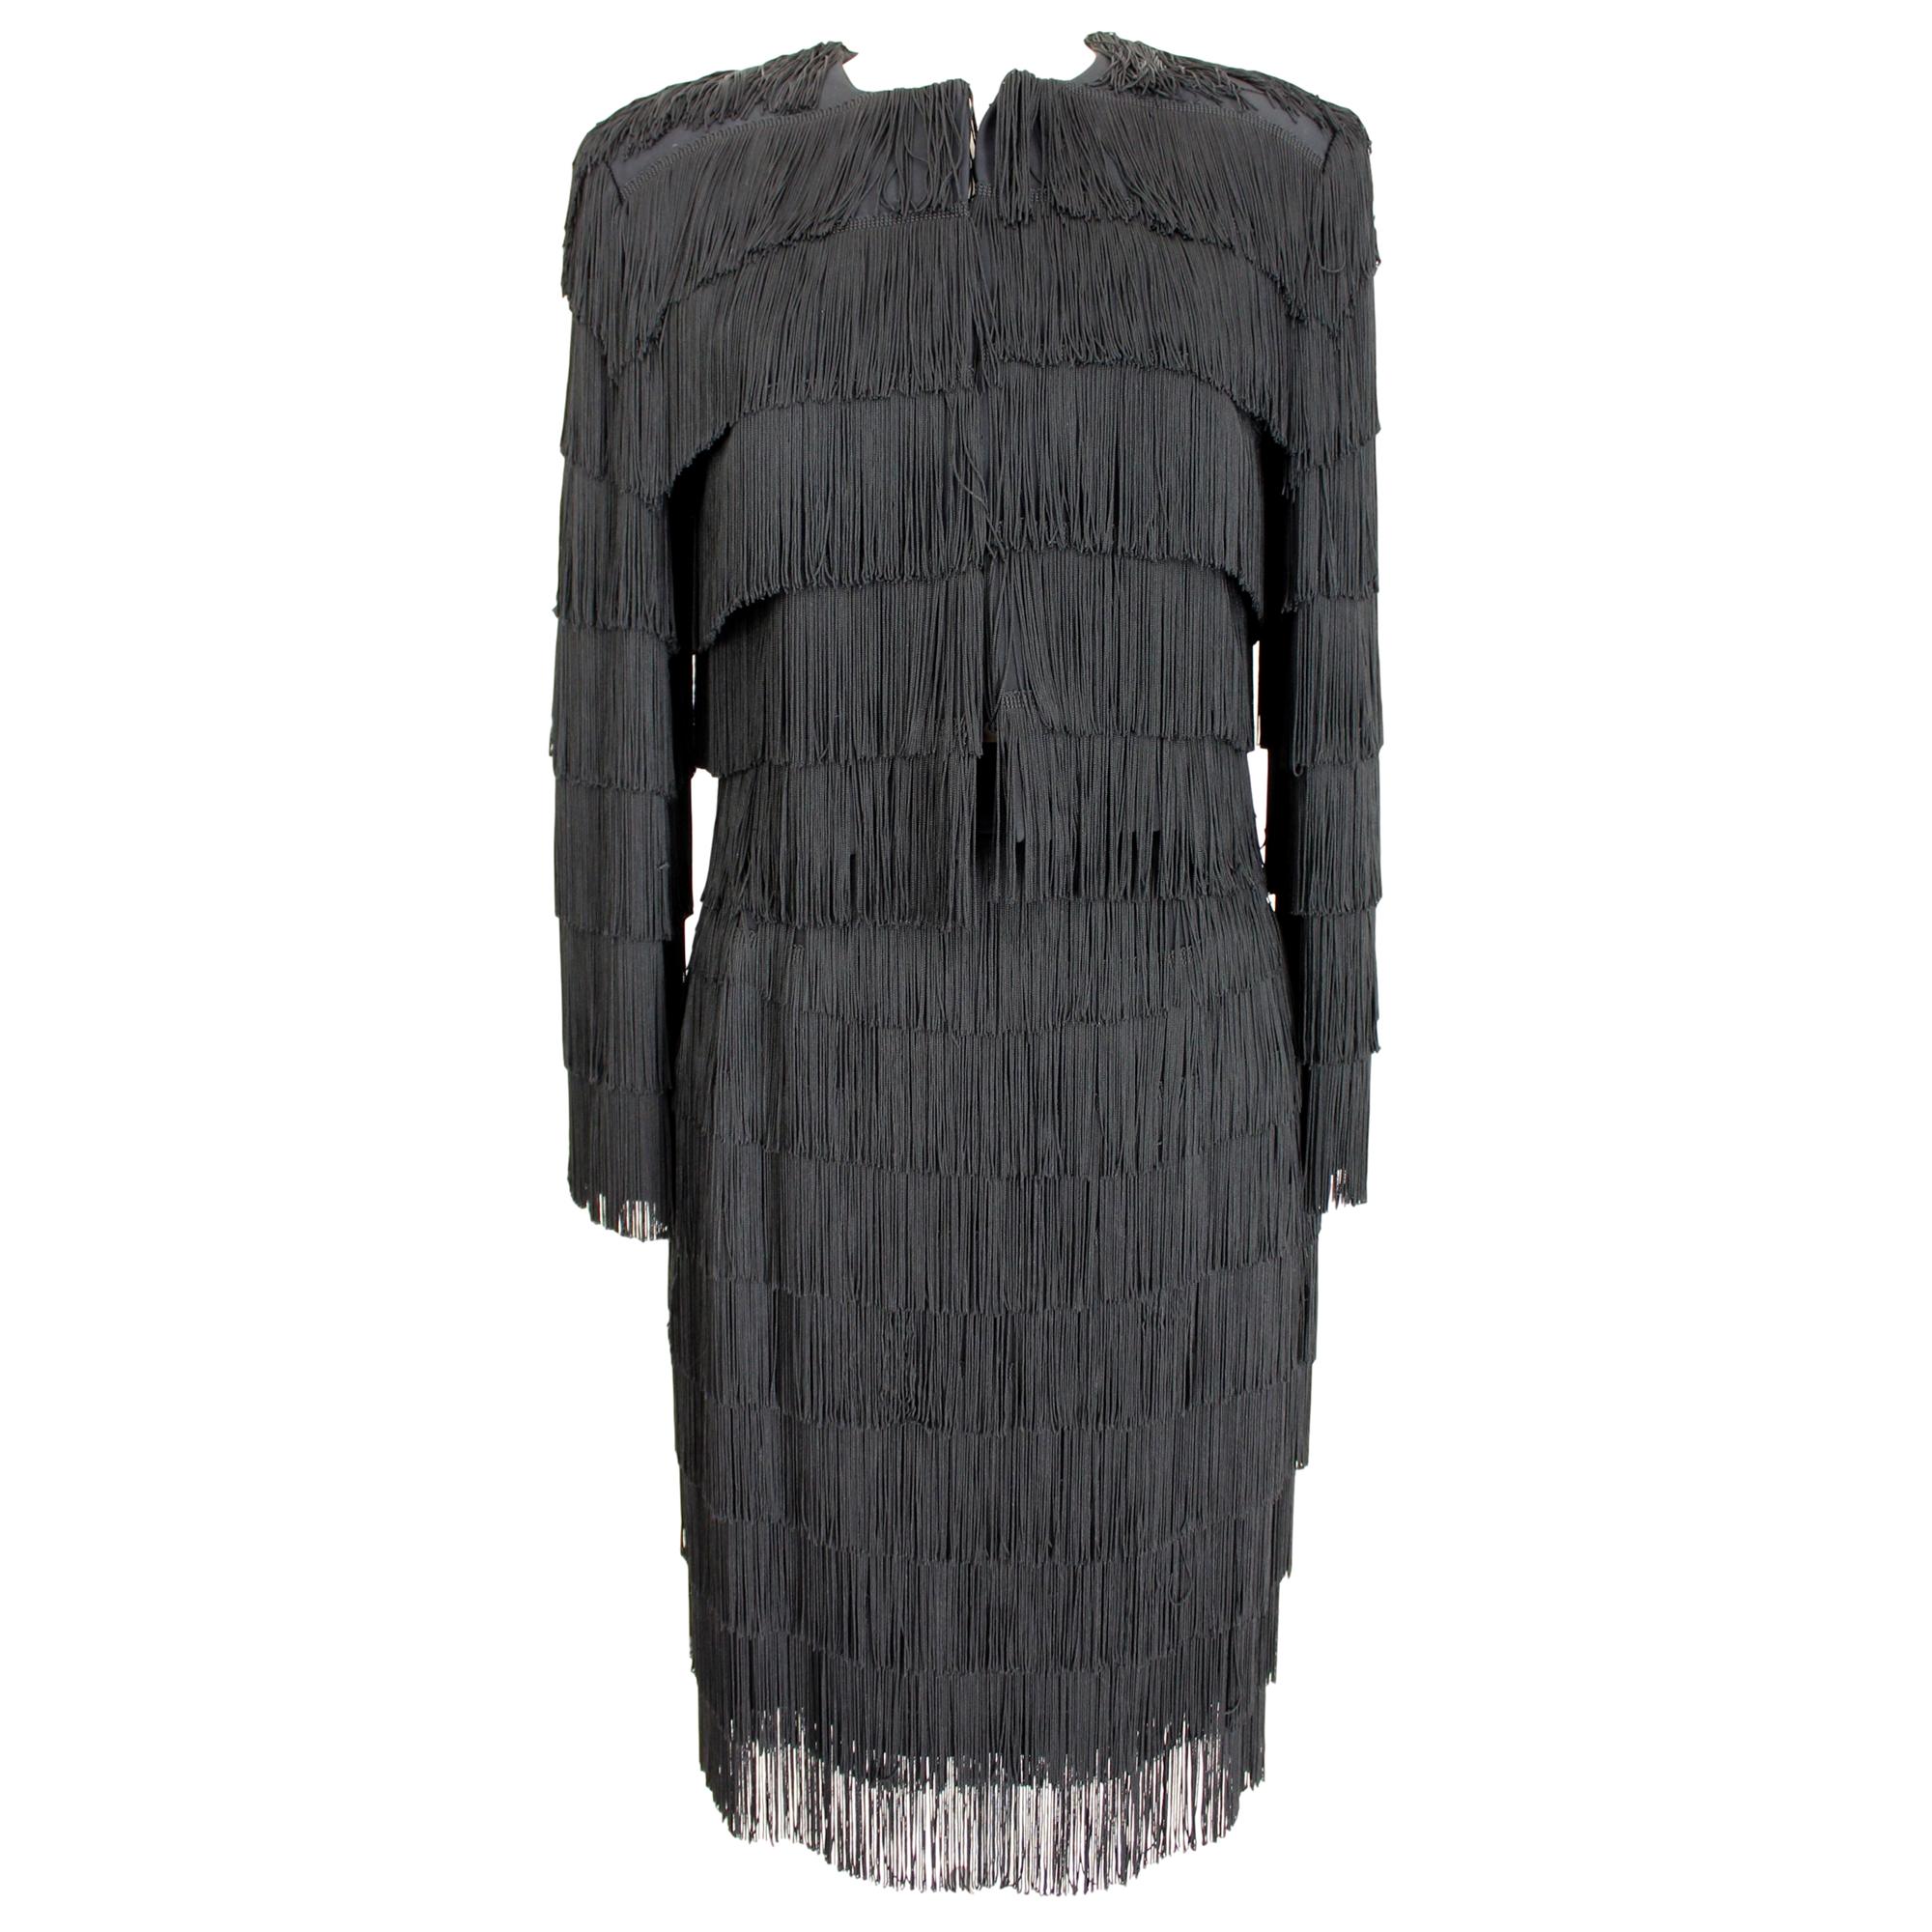 Moschino Black Fringed Charleston Evening Skirt Suit Dress 1990s